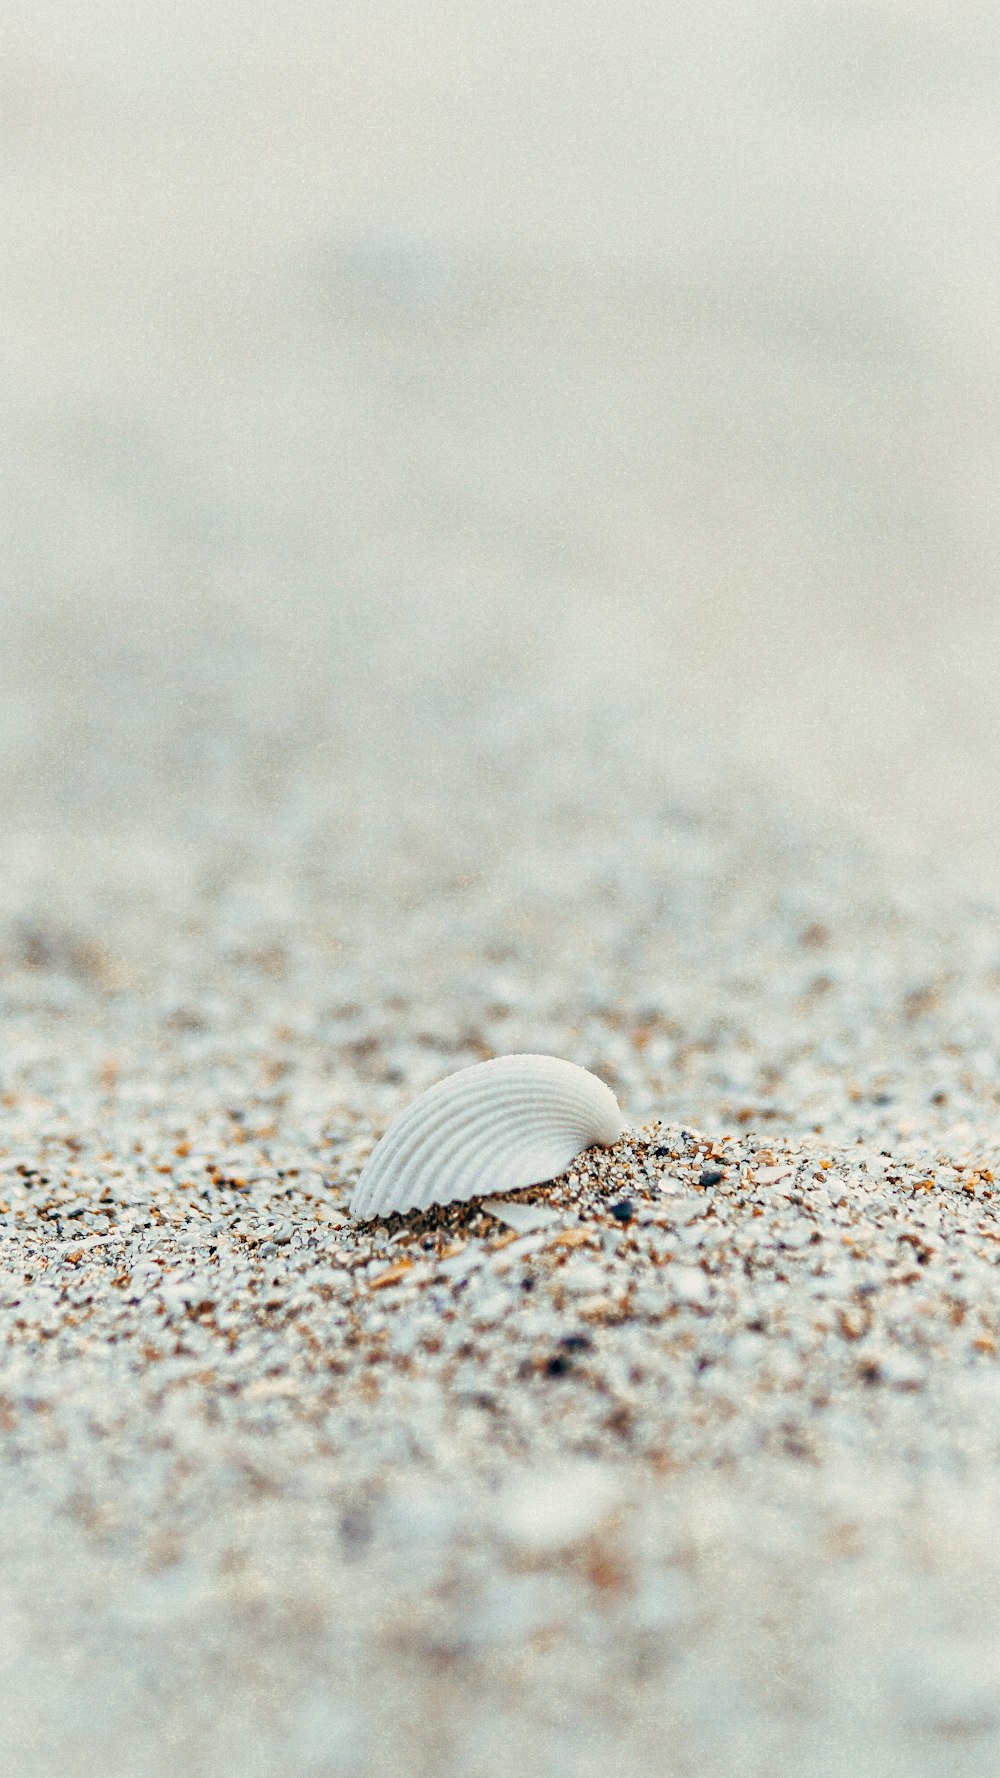 white seashell on brown sand